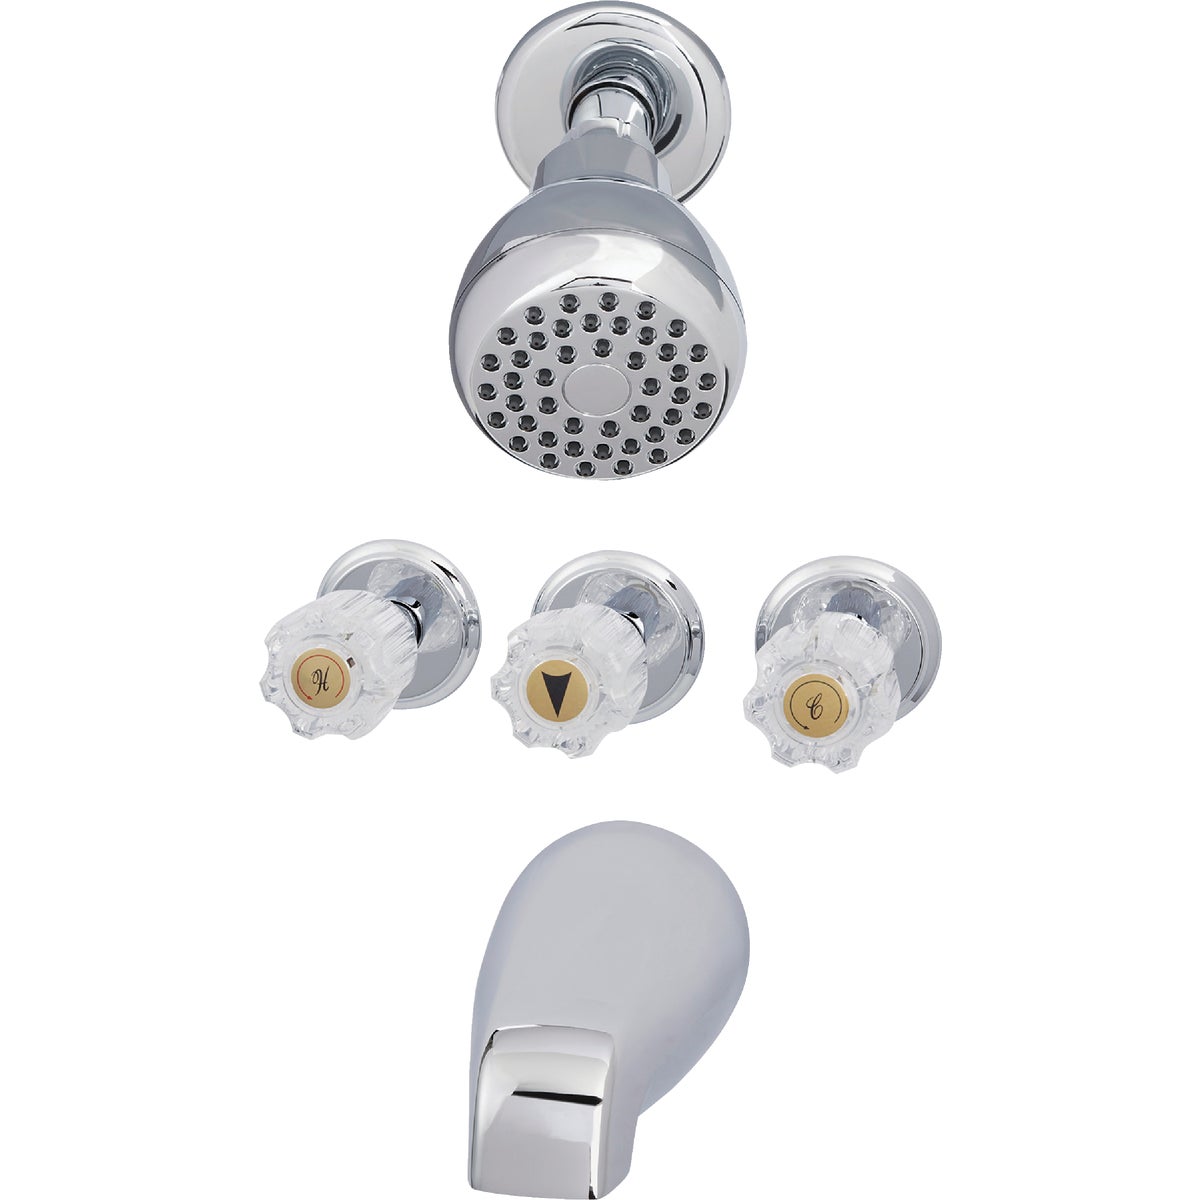 Item 404252, 3 acrylic knob handle tub and shower faucet, polished chrome finish. 1.